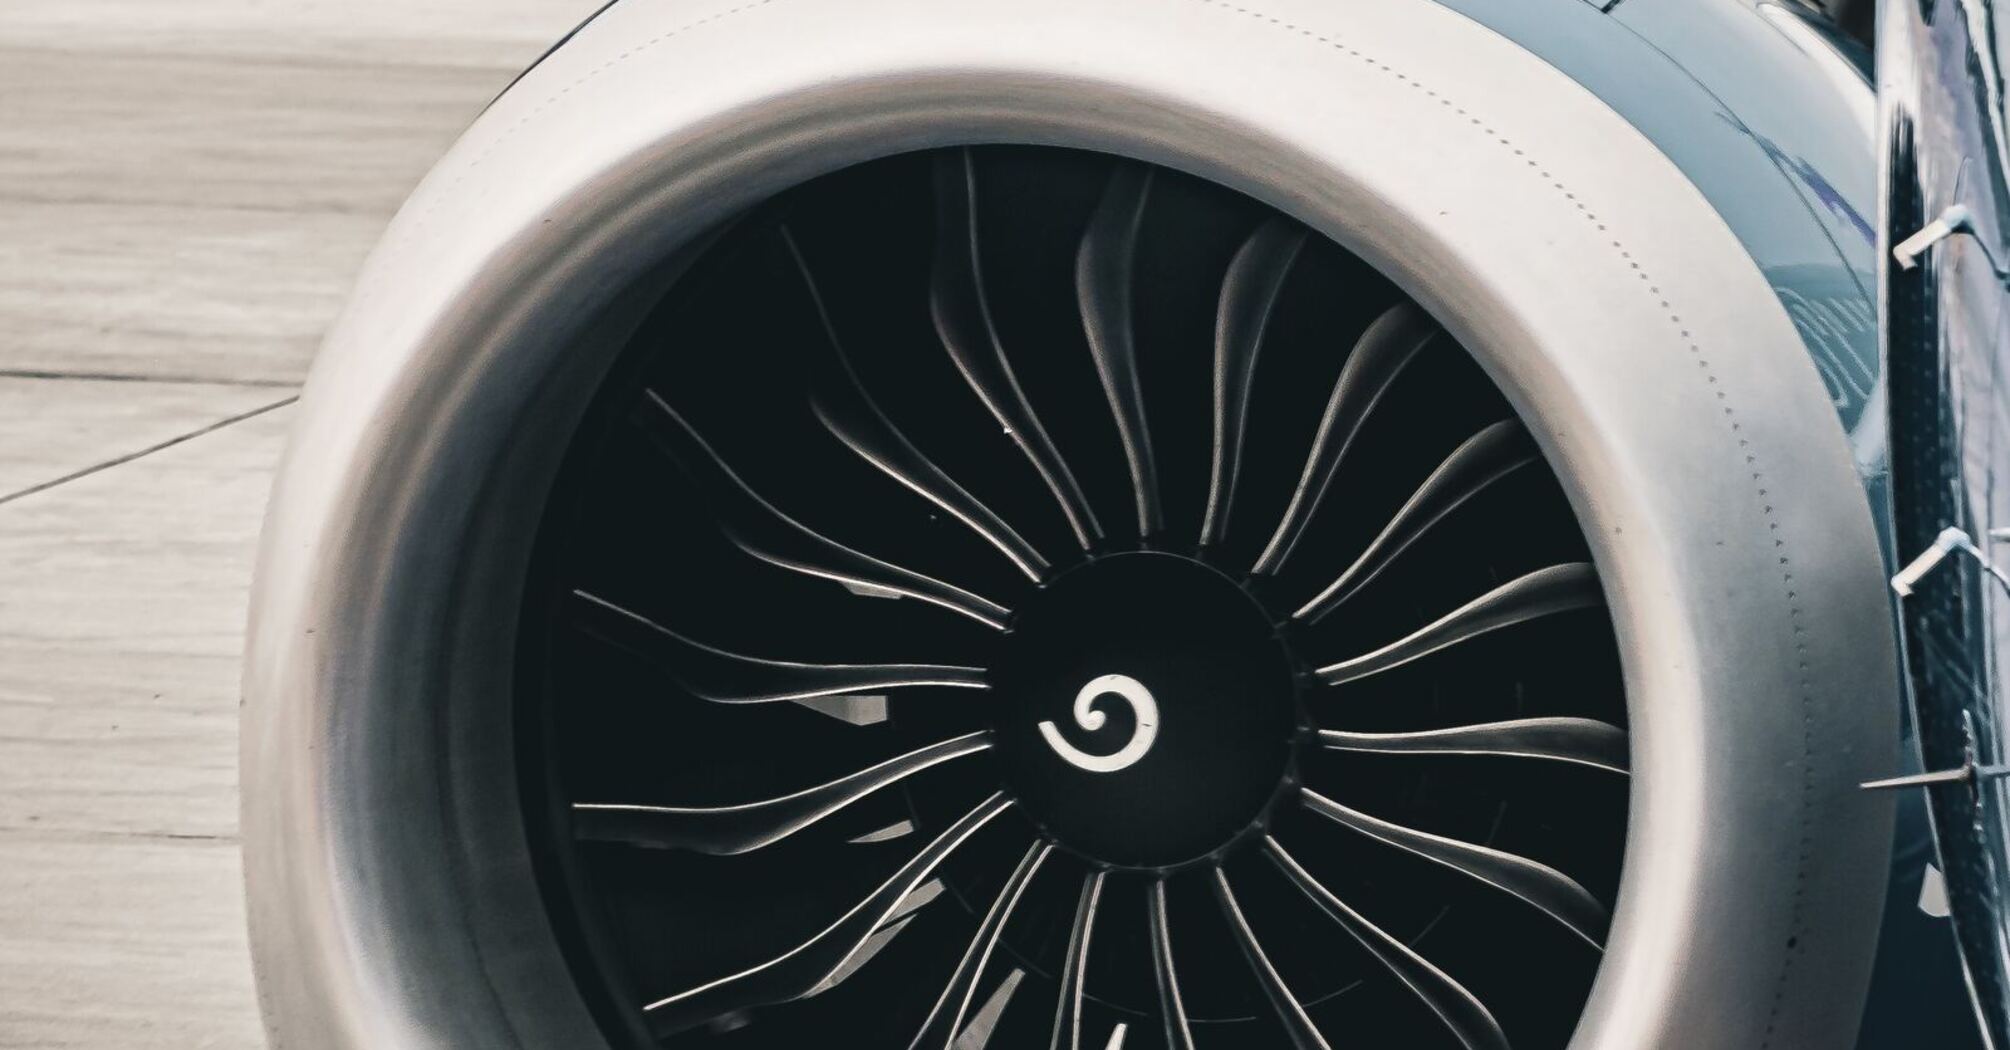 Boeing aircraft turbine